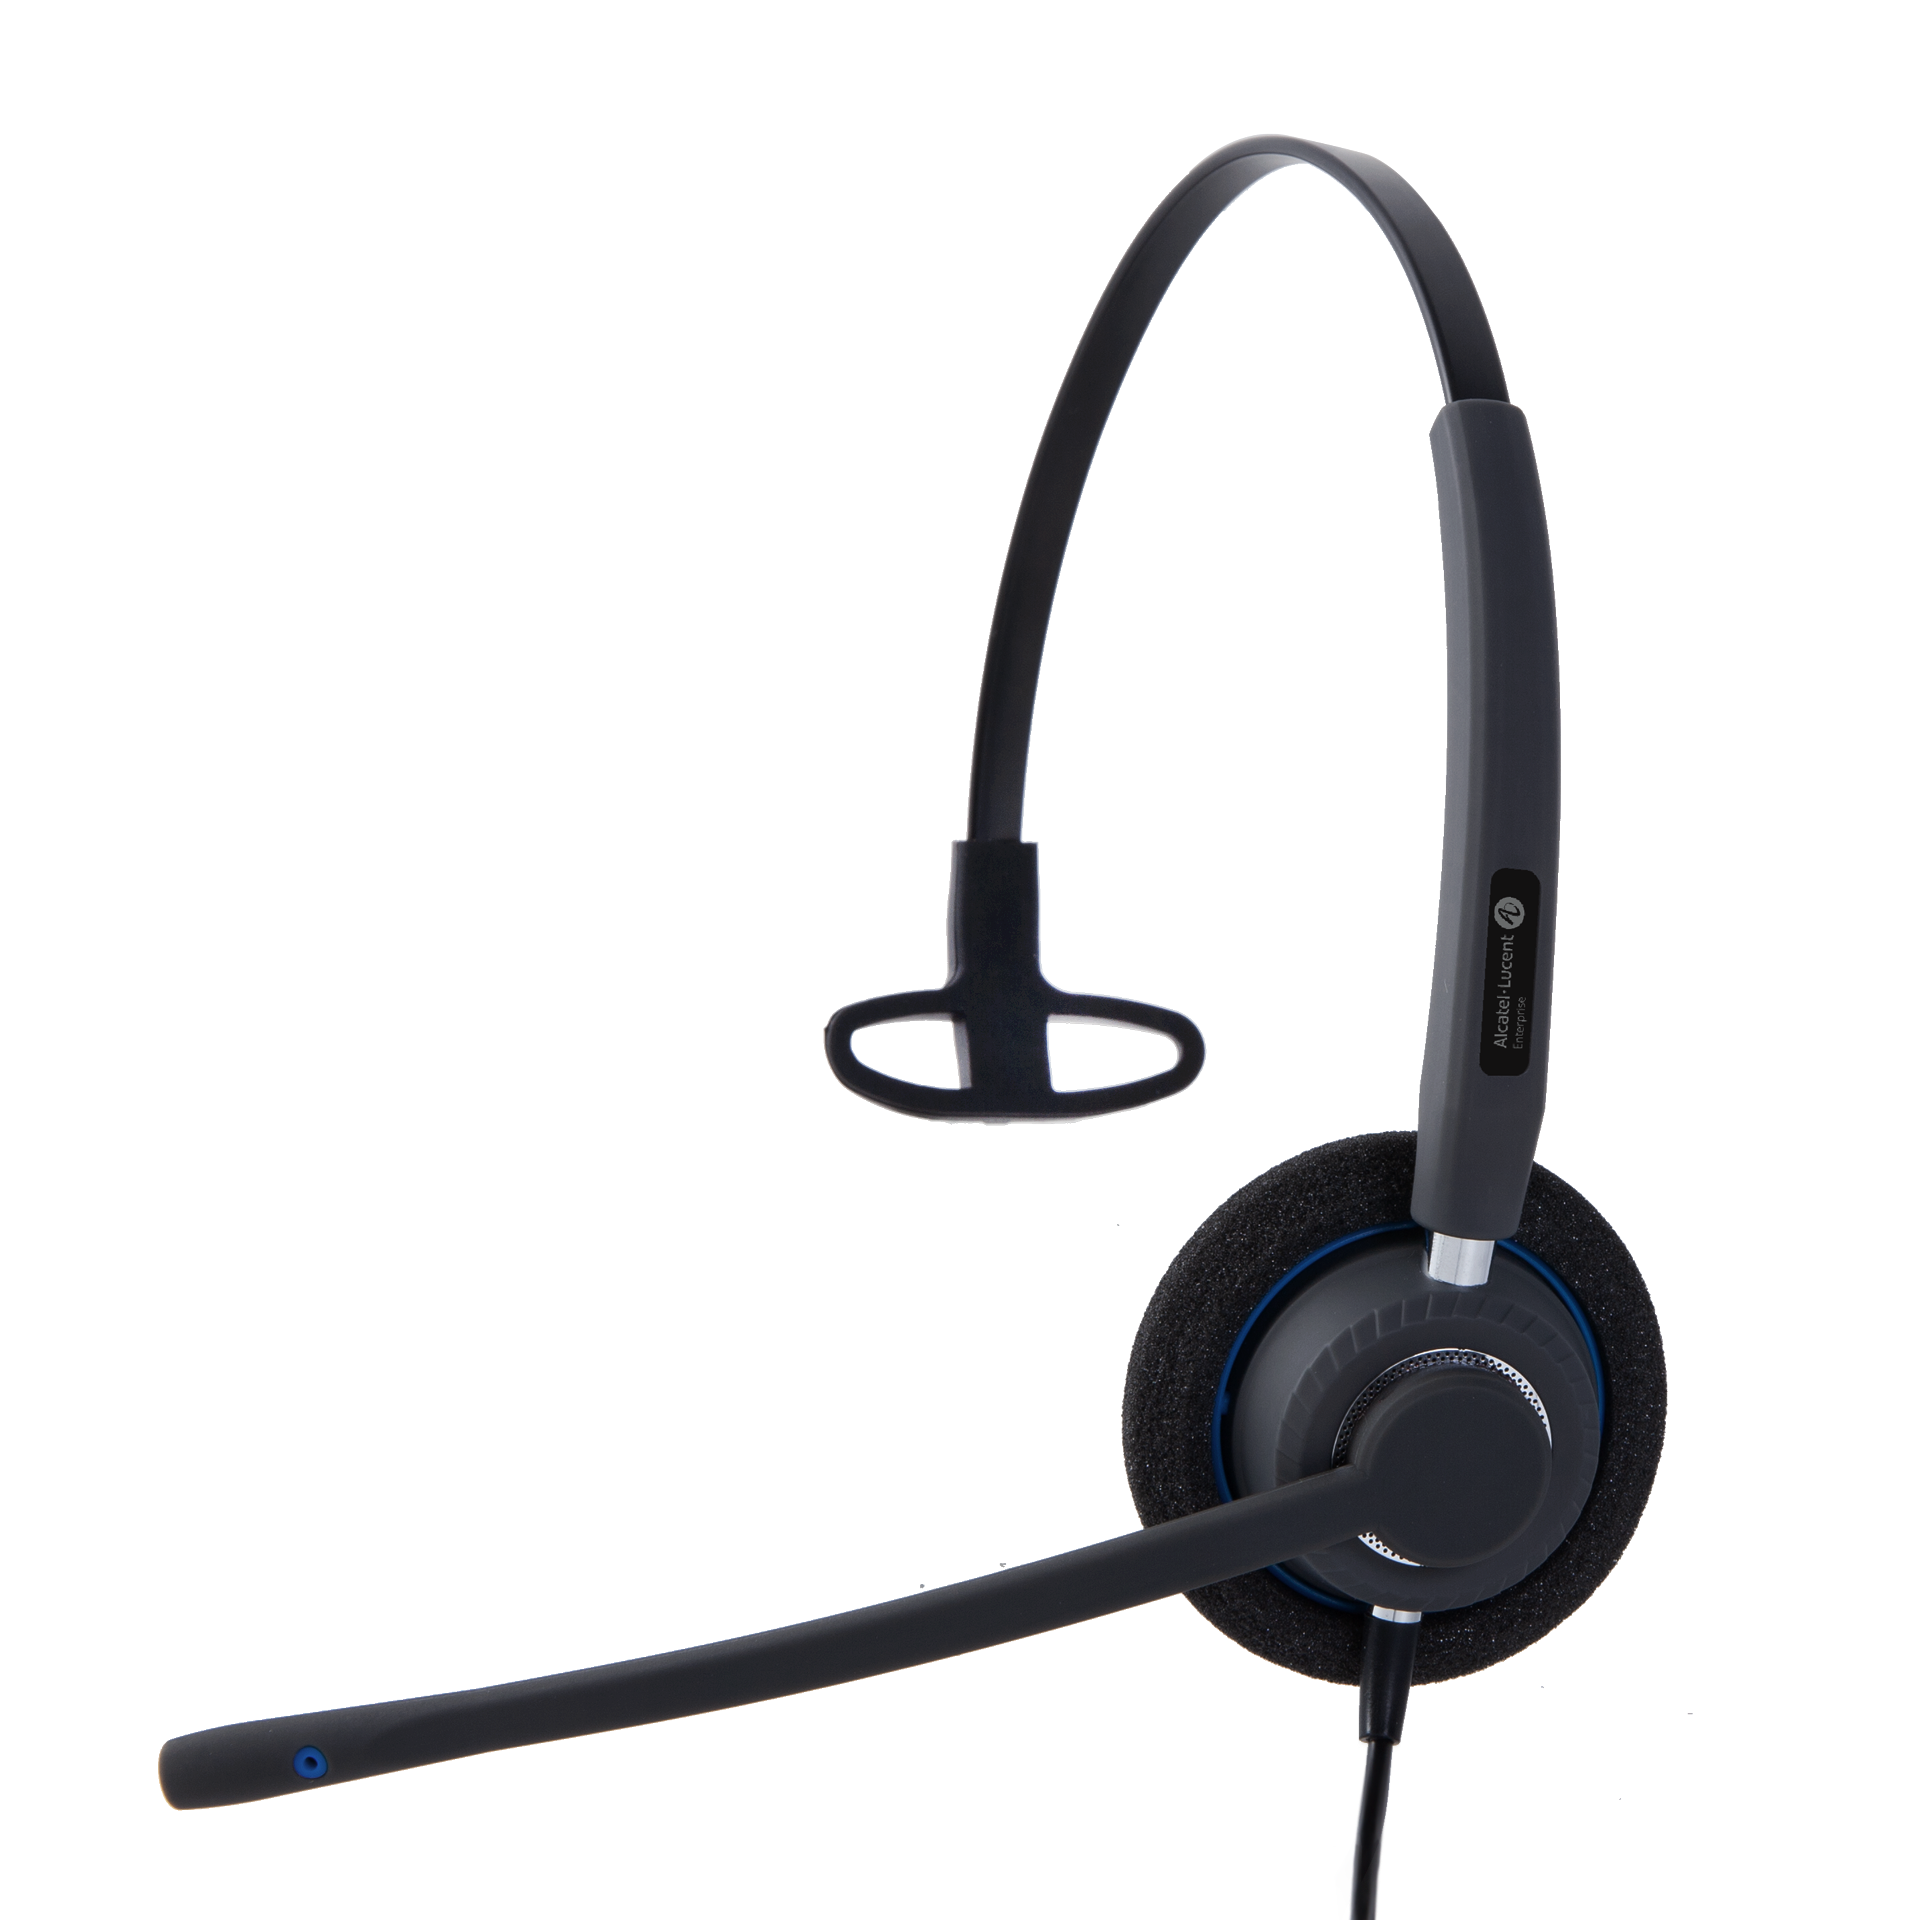 High-qualitynotion Speakers With Voice Optimization Noise-cancelling Microphone USB Interface AH 21 U Premium USB Headset